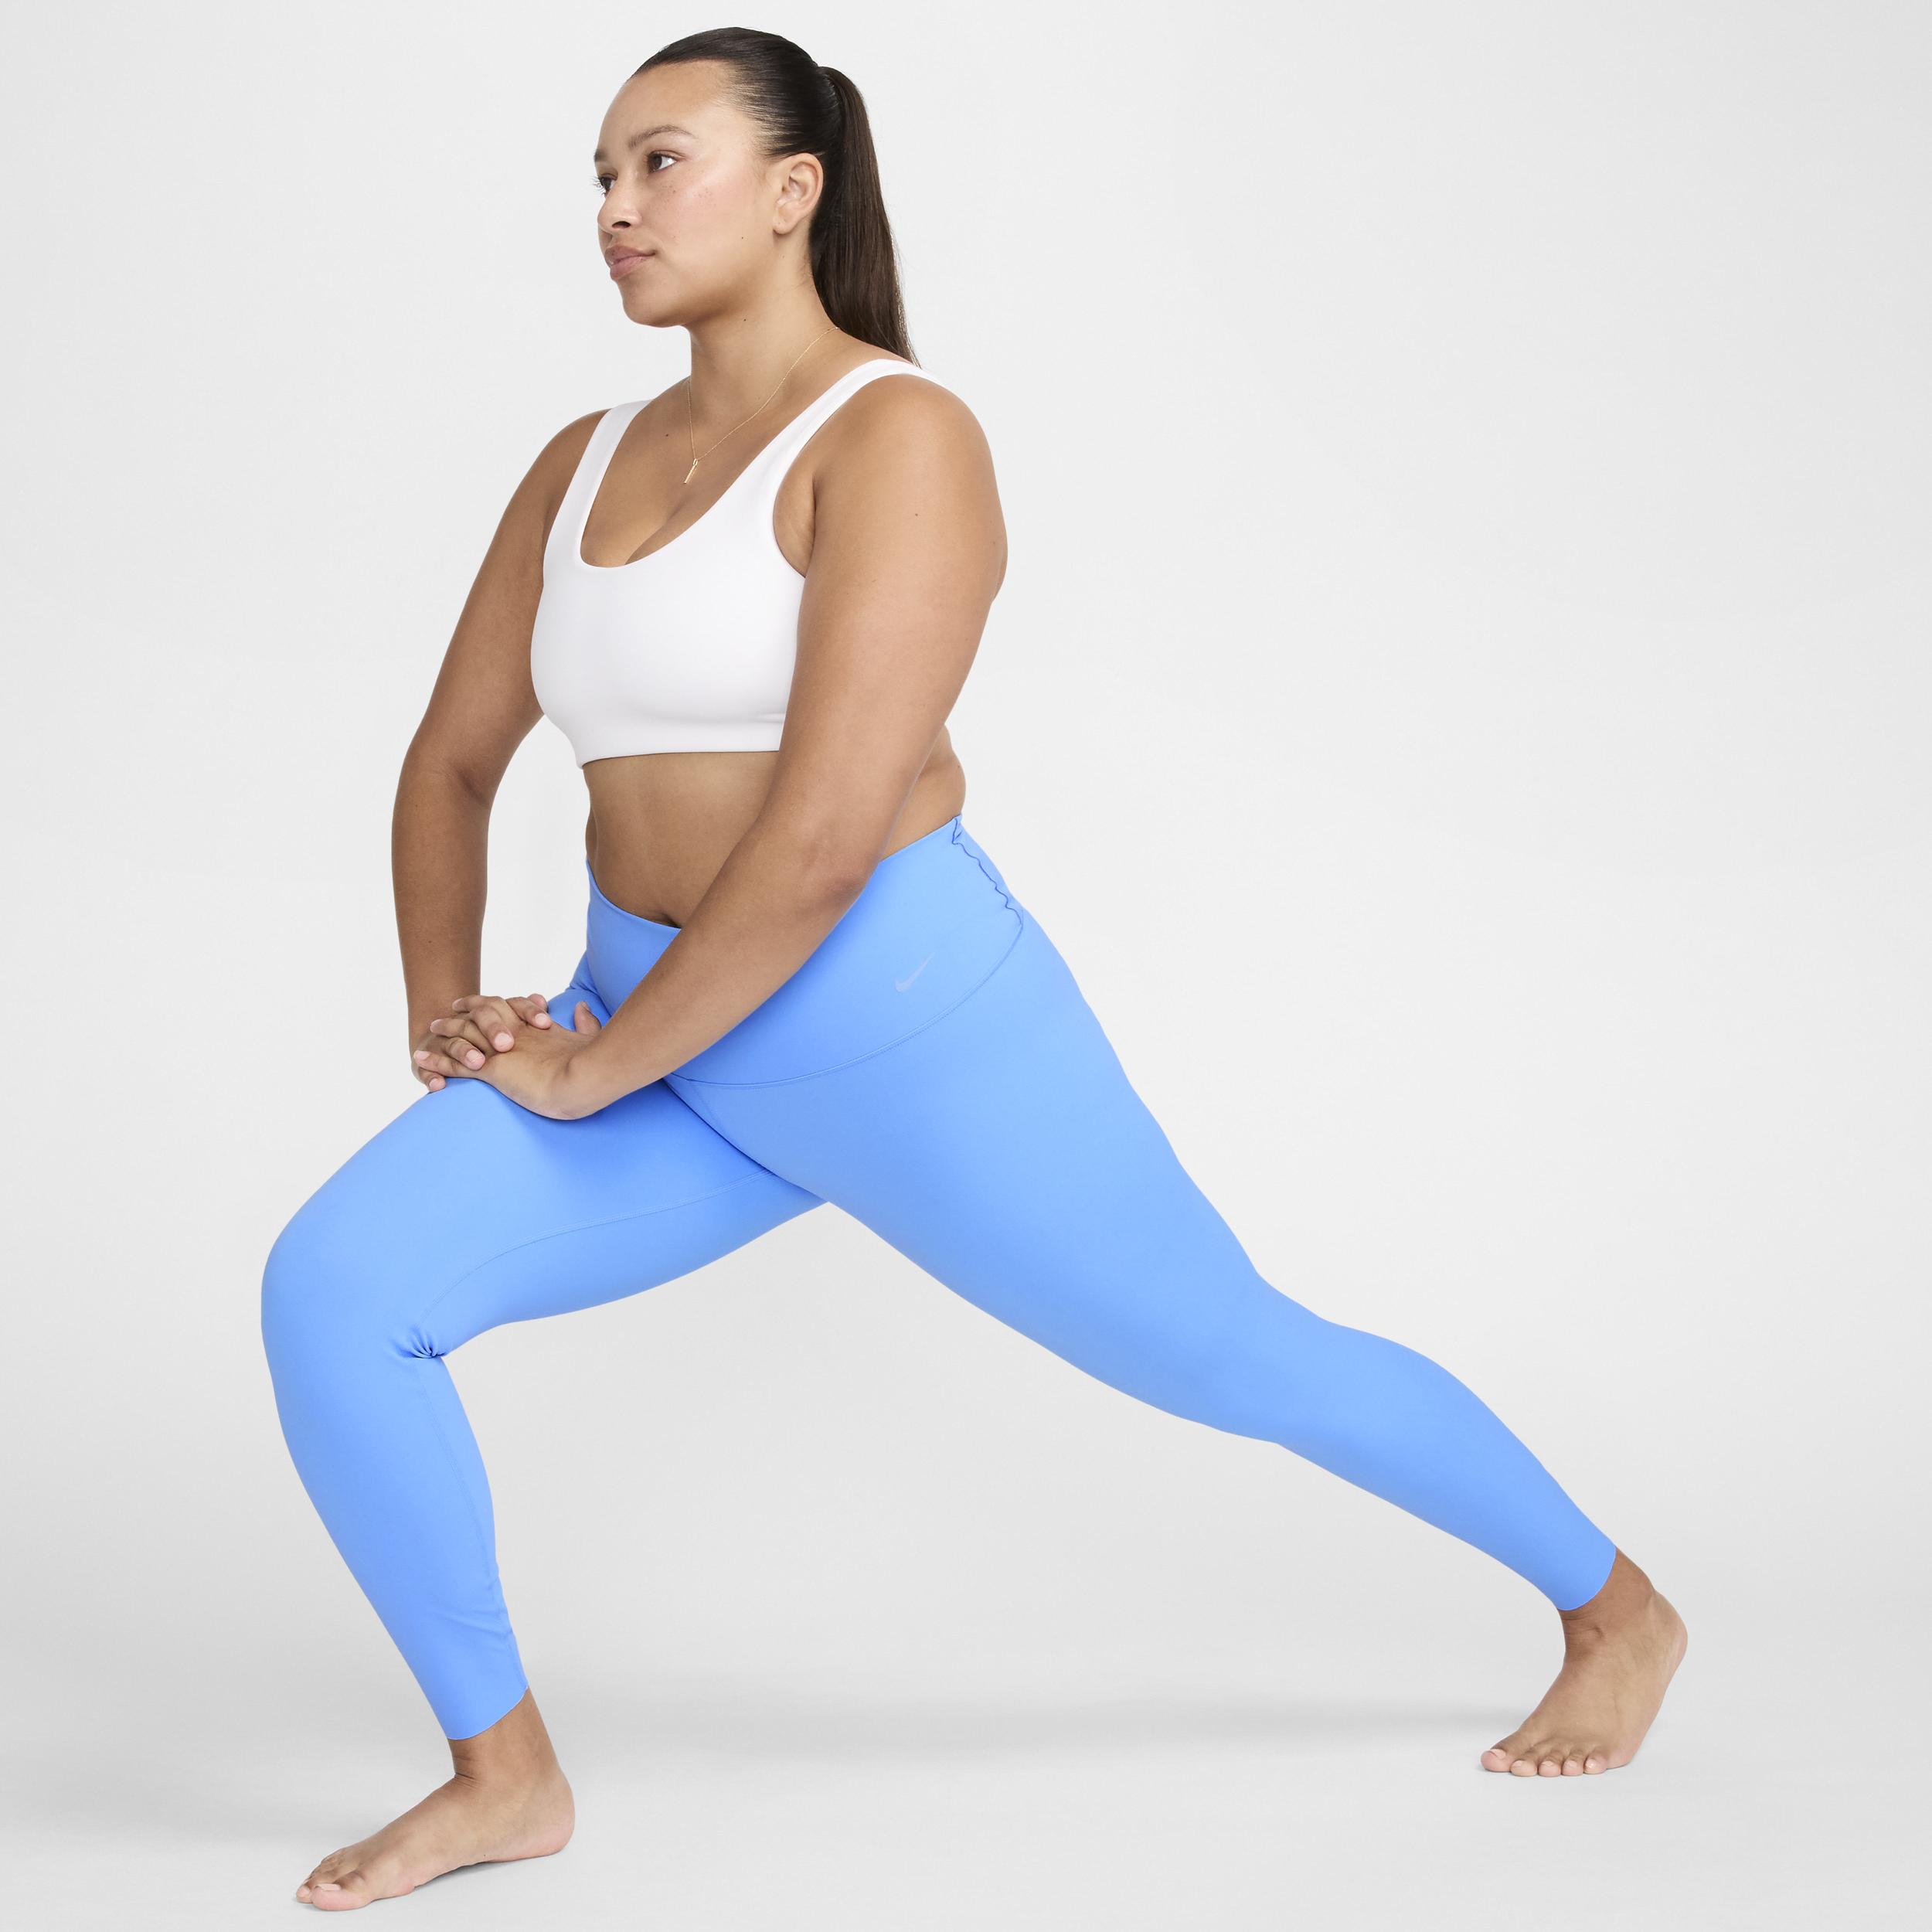 Leggings a tutta lunghezza a vita alta e sostegno leggero Nike Zenvy – Donna - Blu